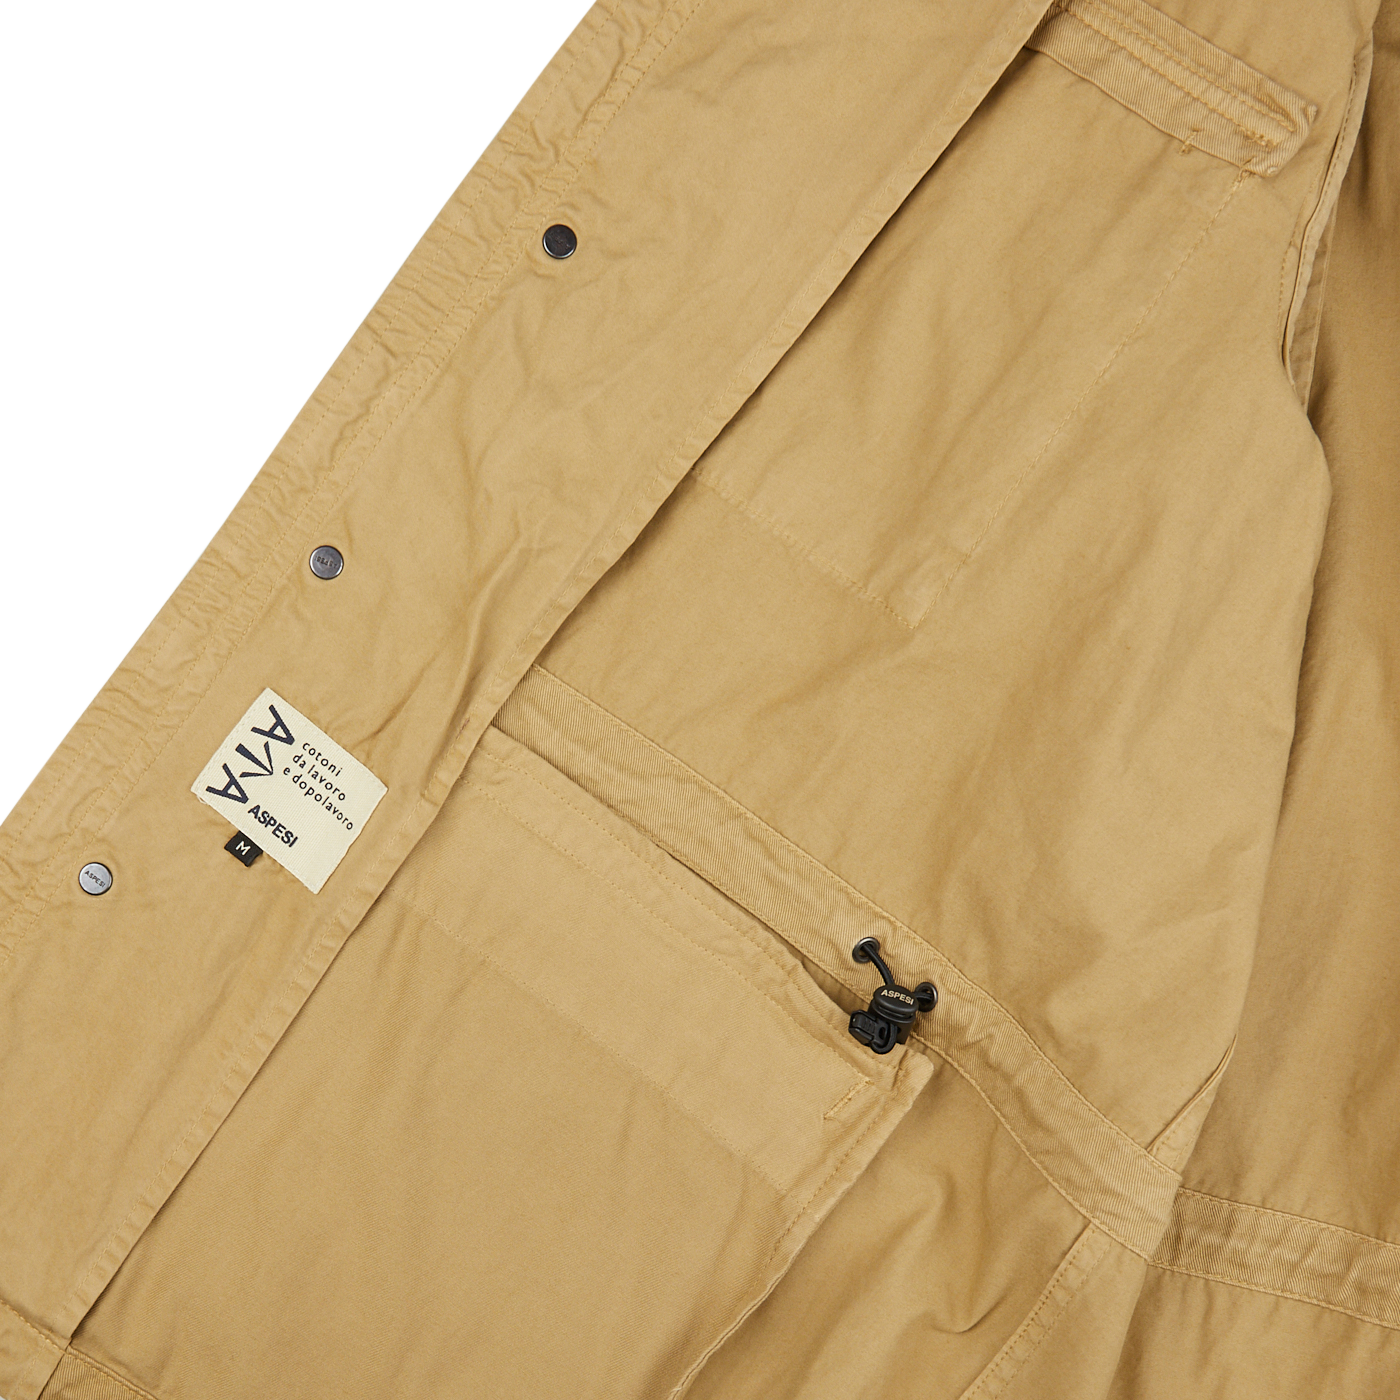 The back pocket of a Khaki Beige Cotton Mini Field Jacket by Aspesi.